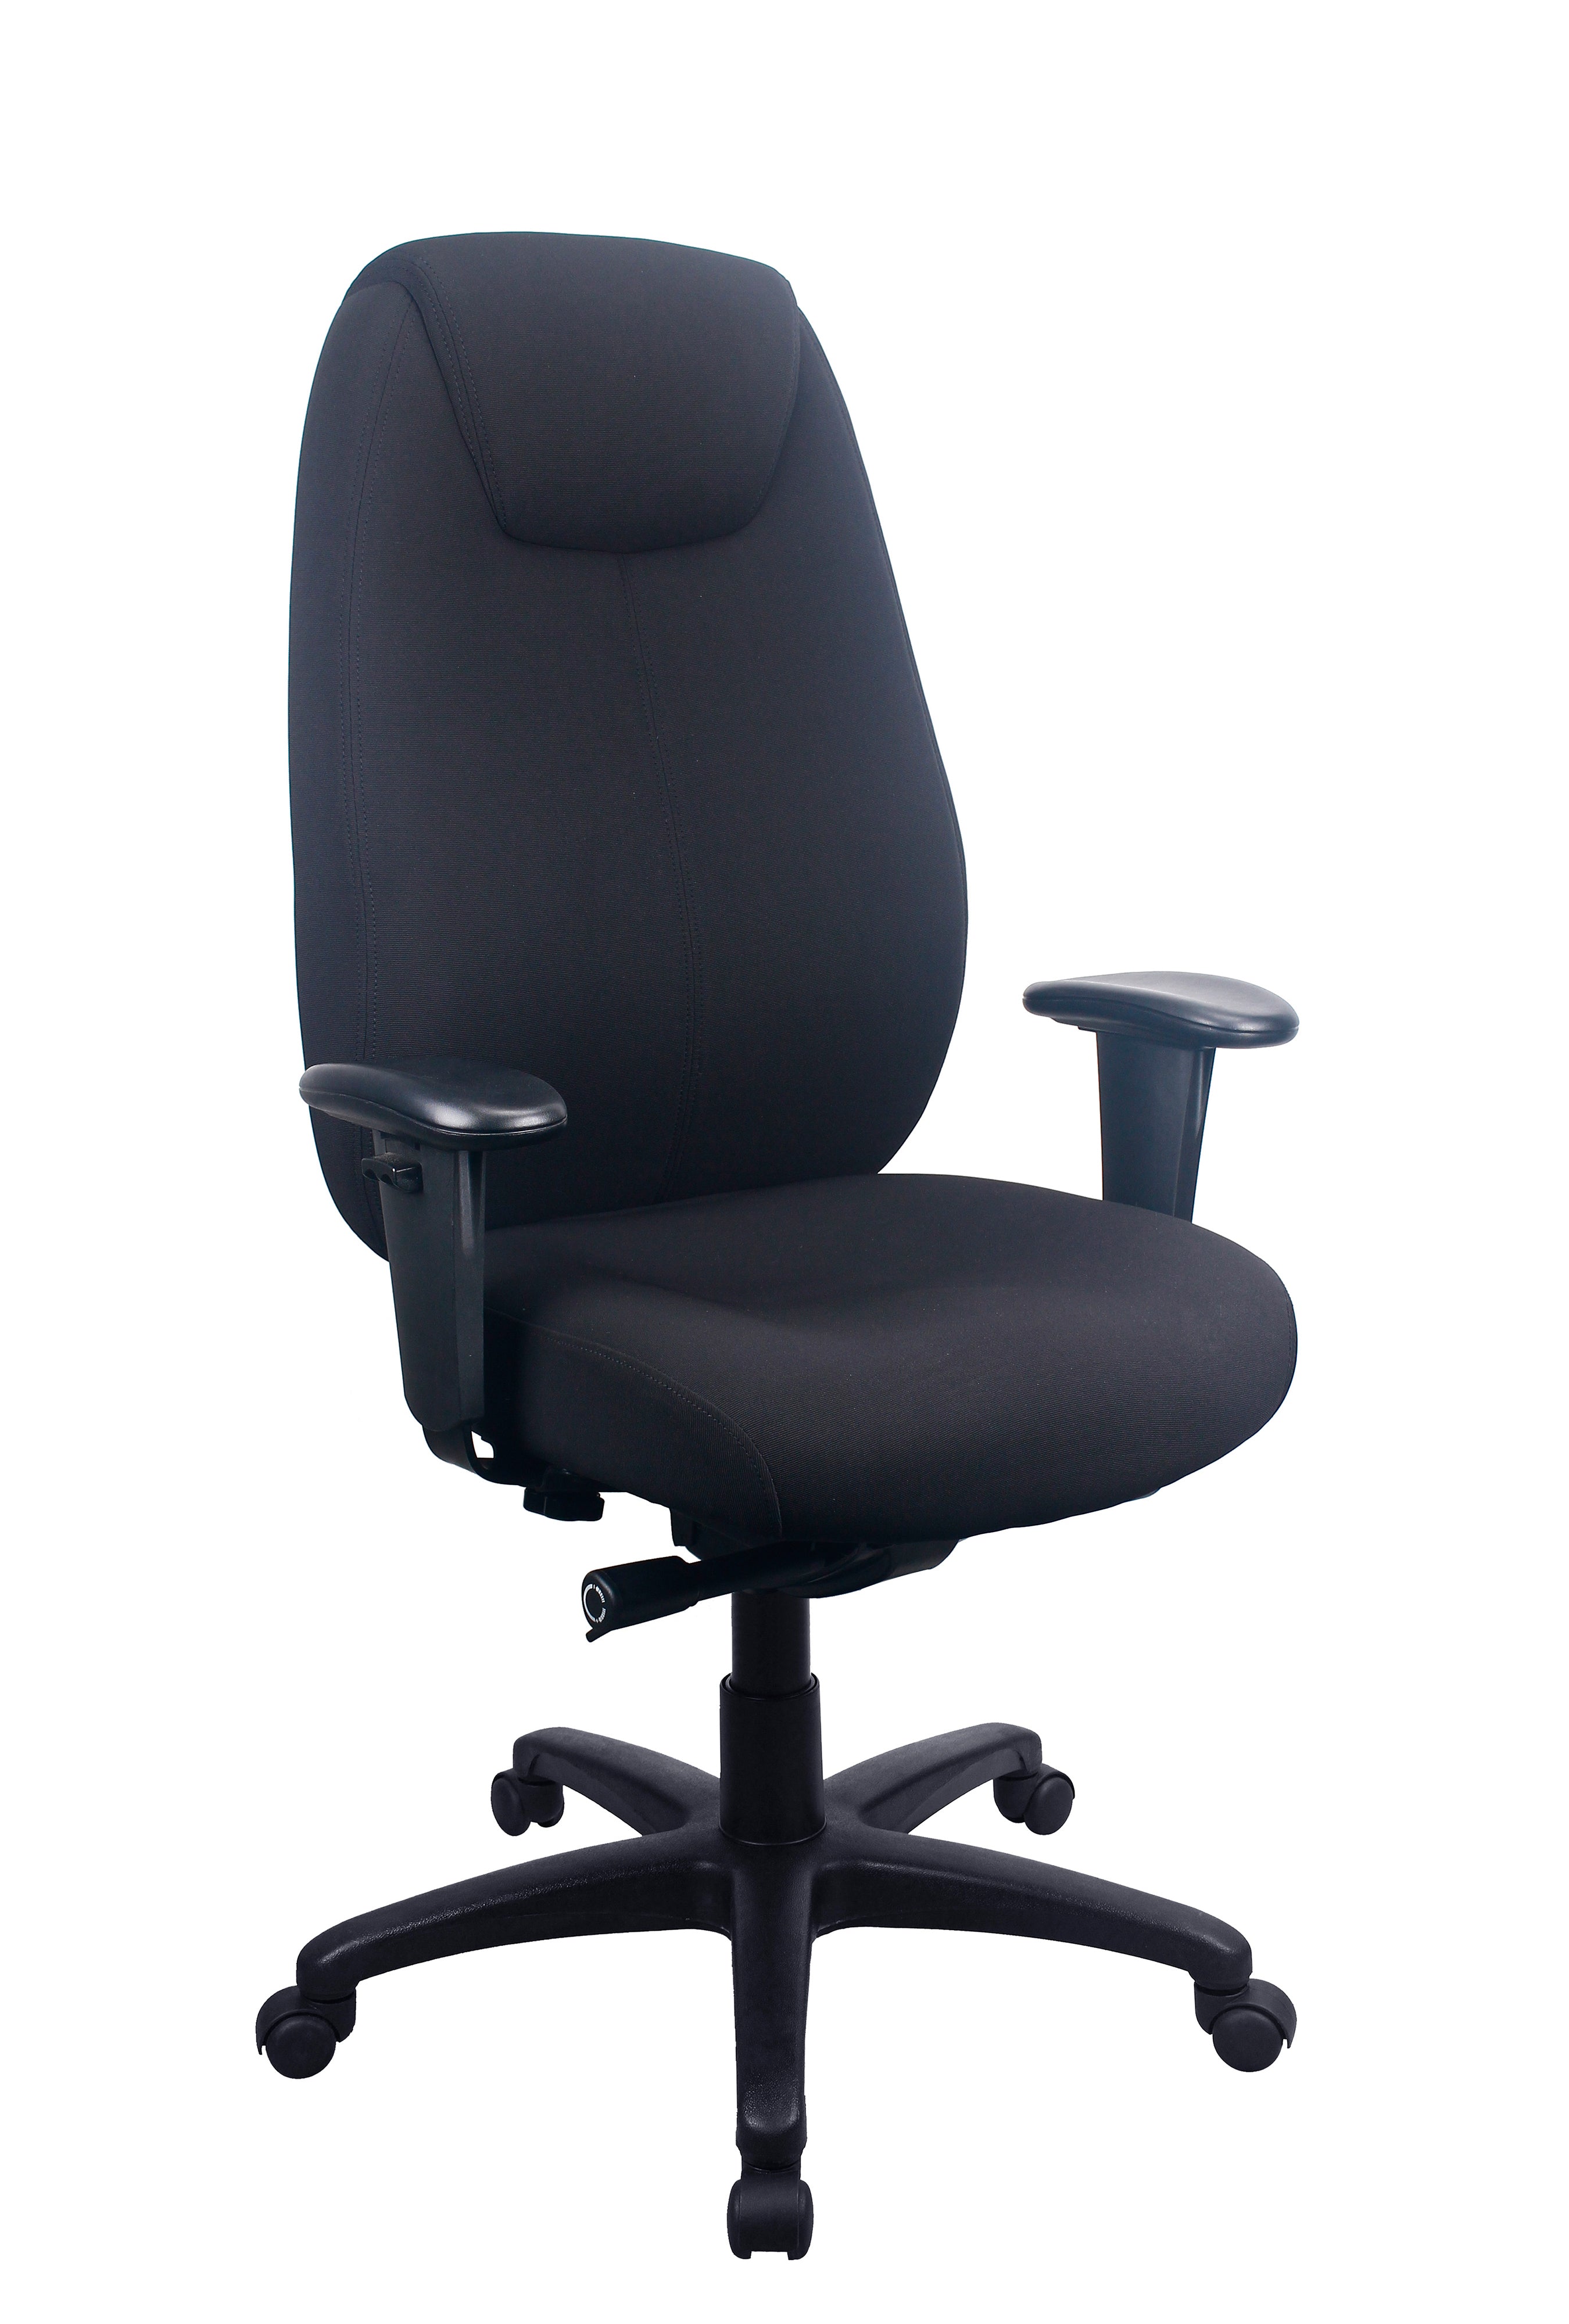 TEMPUR®-6400 Lumbar Support™ Chair: Where Design Meets Relaxation